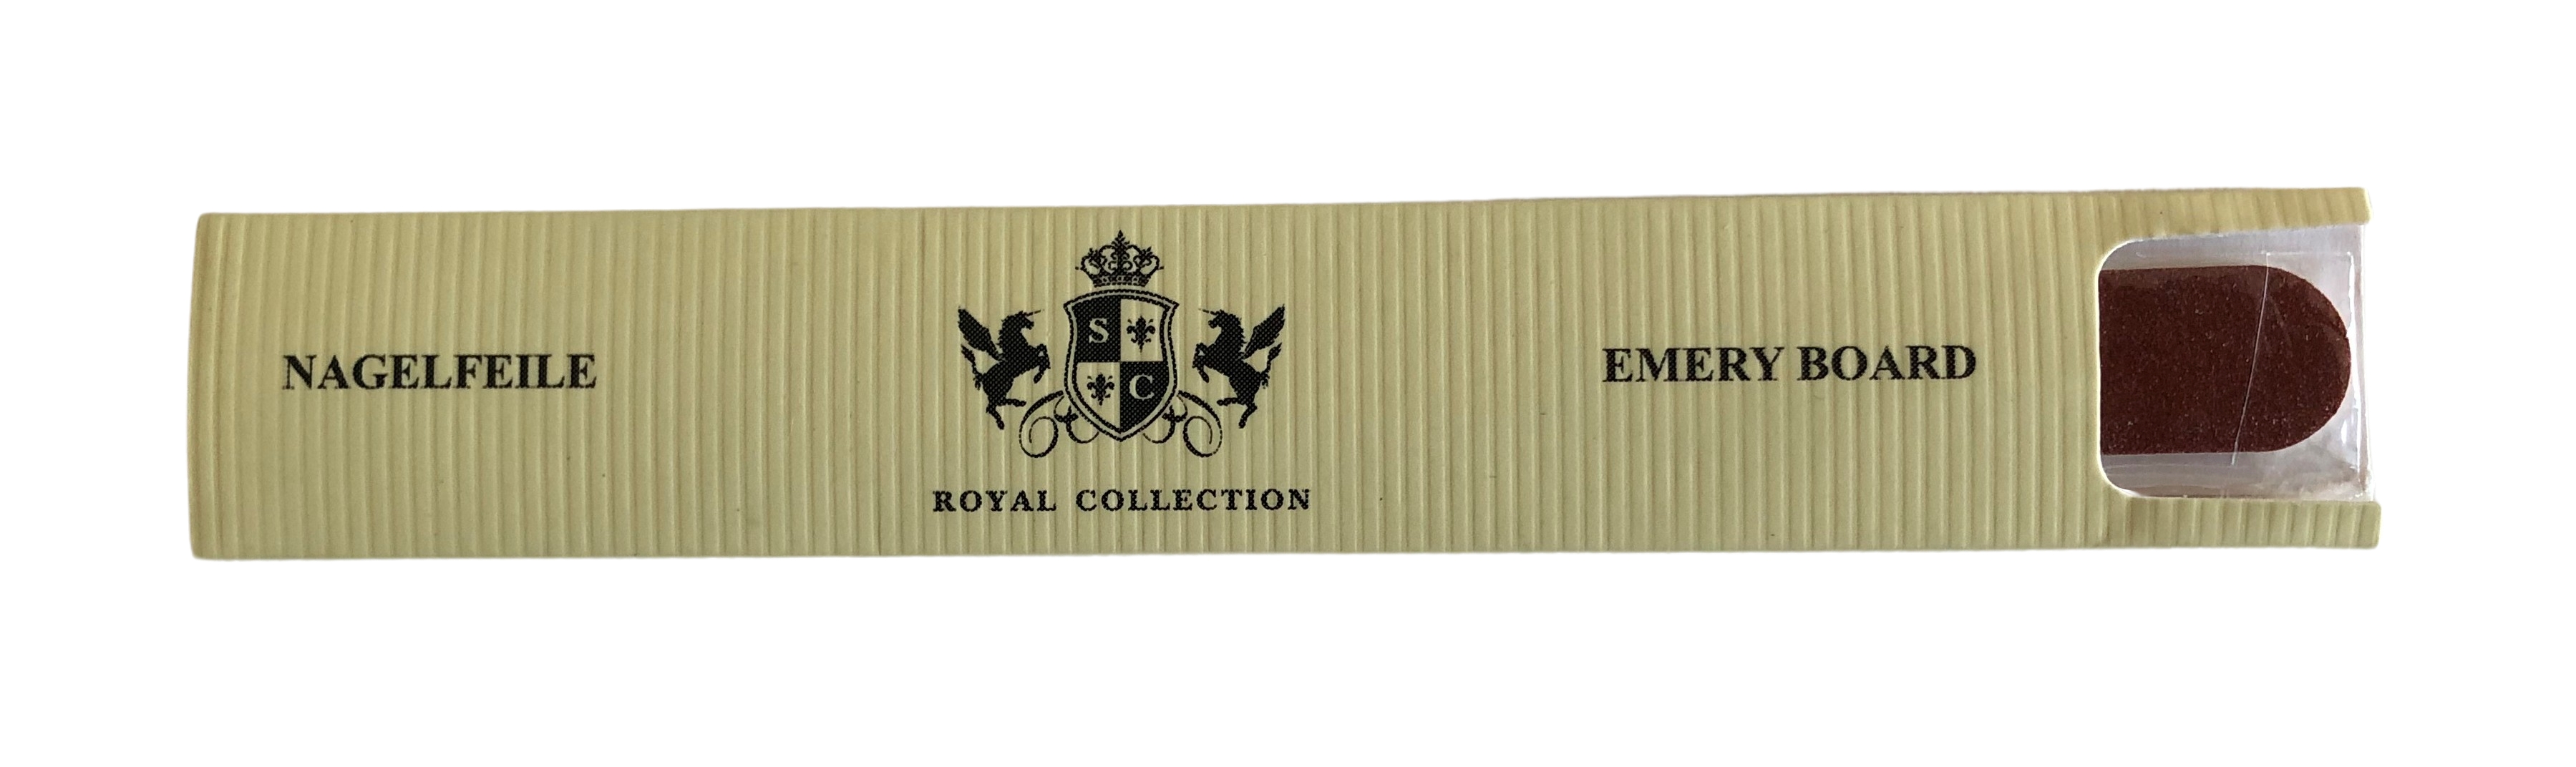 200 Nagelfeile Standard Royal Collection